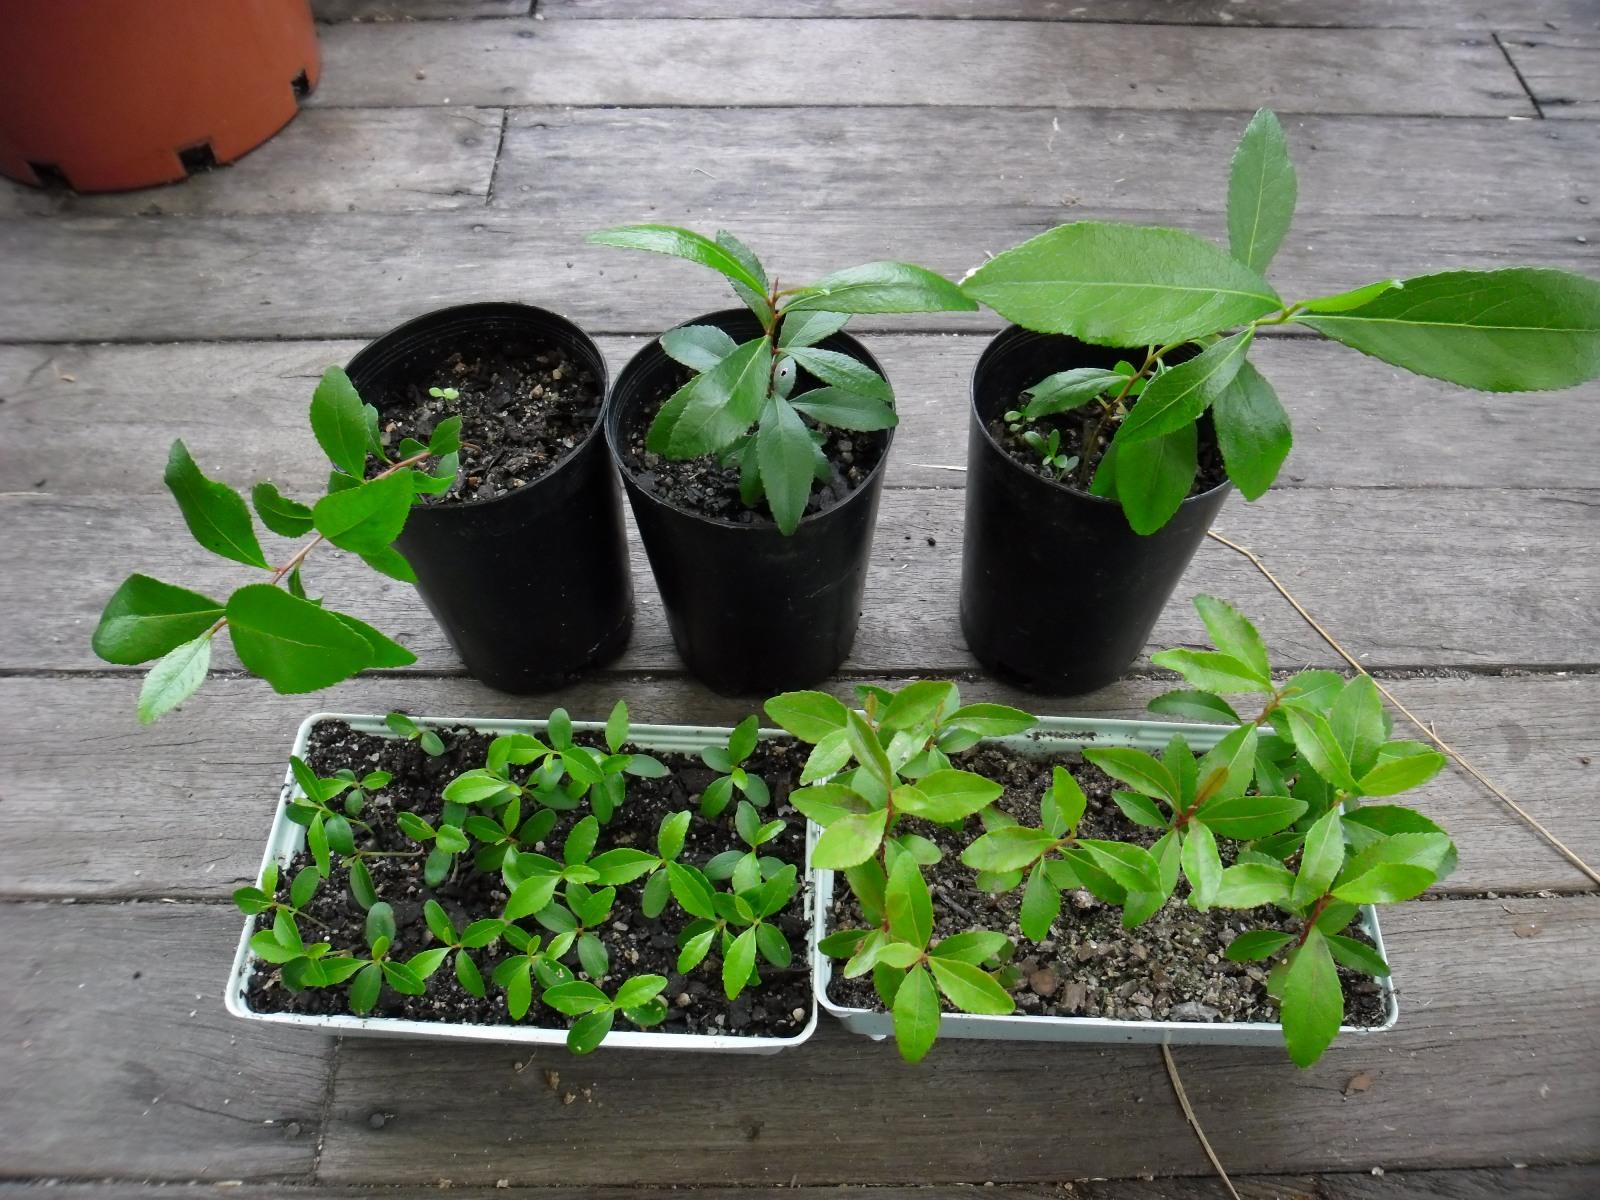 ph x open catha edulis seedlings